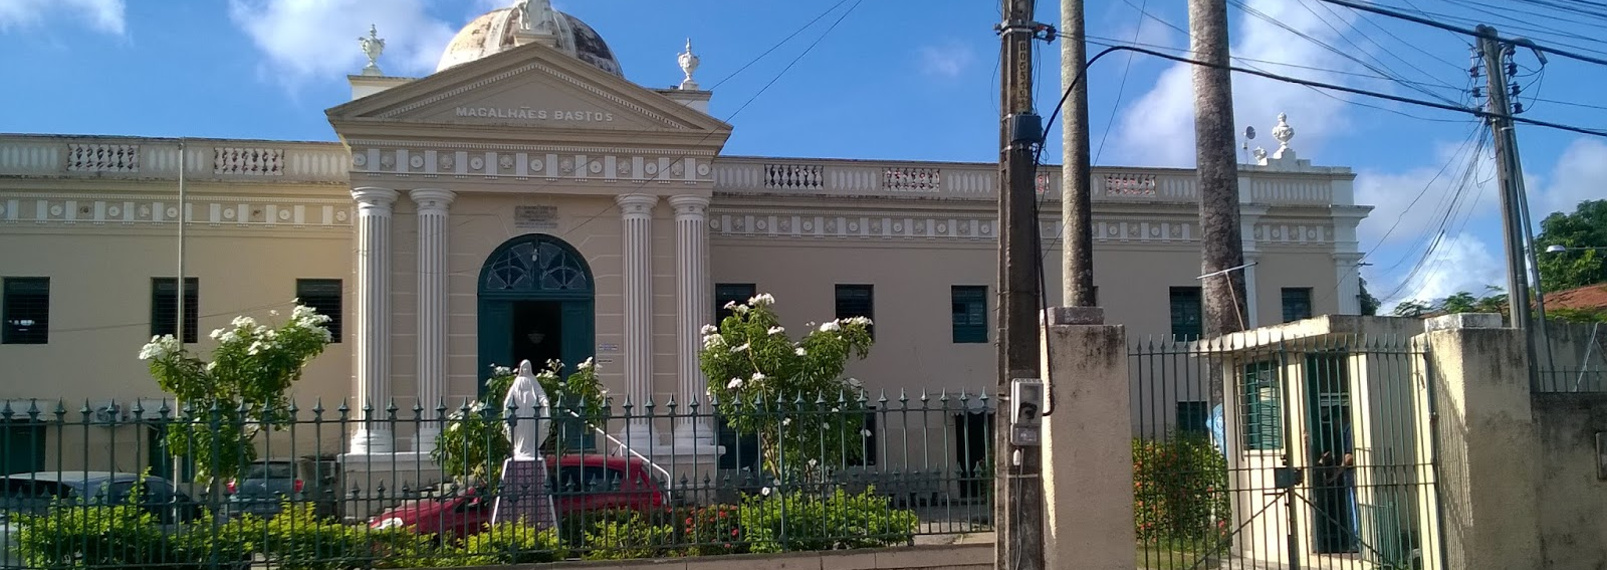 Educandario Magalhaes Bastos - eine Einrichtung der Santa Casa de Misericordia do Recife